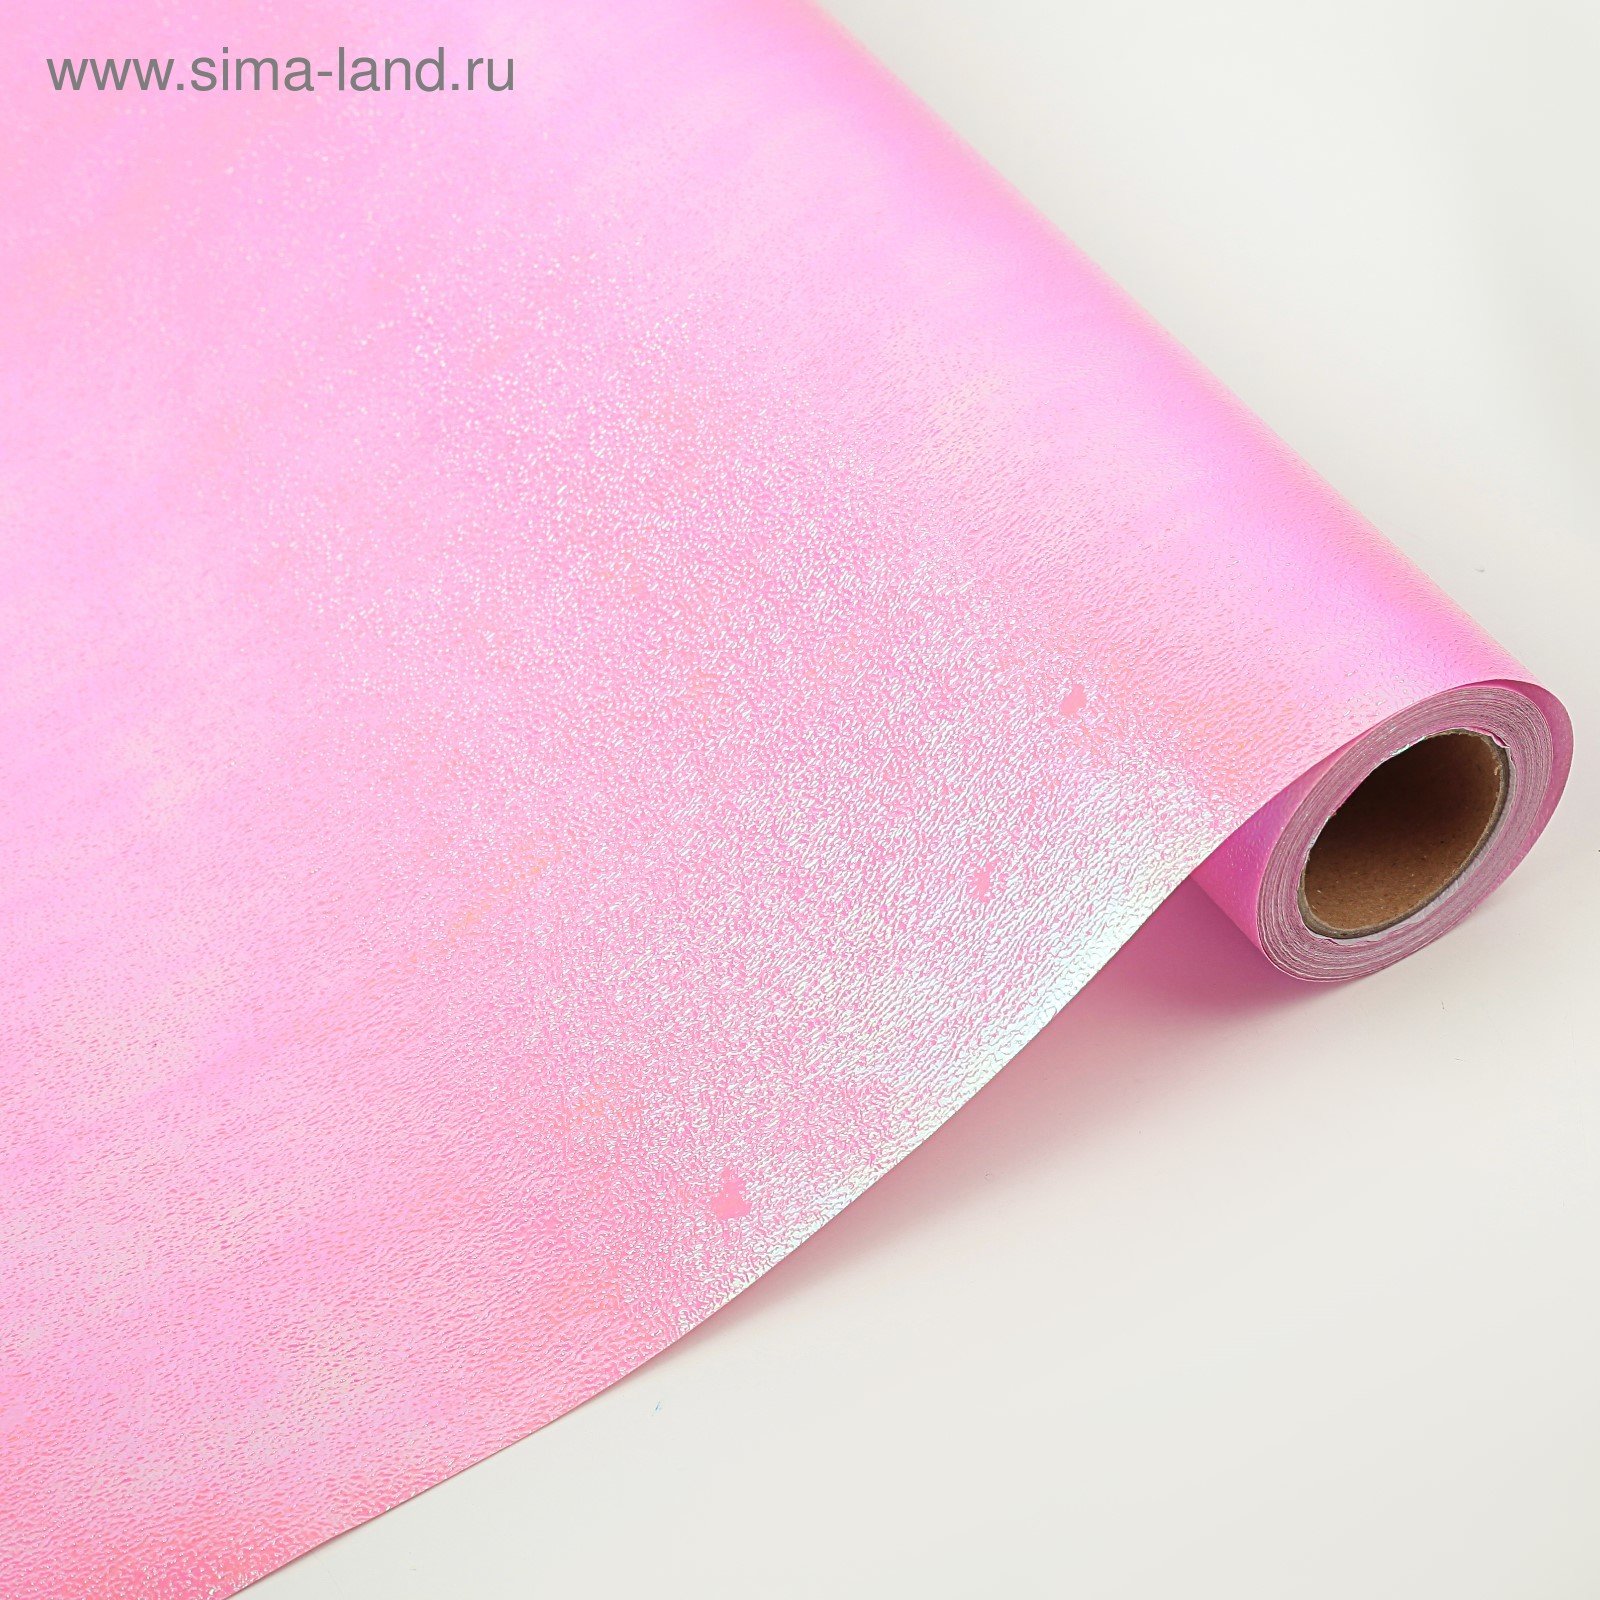 Перламутровая пленка. Бумага упаковочная. Оберточная бумага розовая. Упаковочная бумага розовая. Пленка самоклеющаяся розовая.